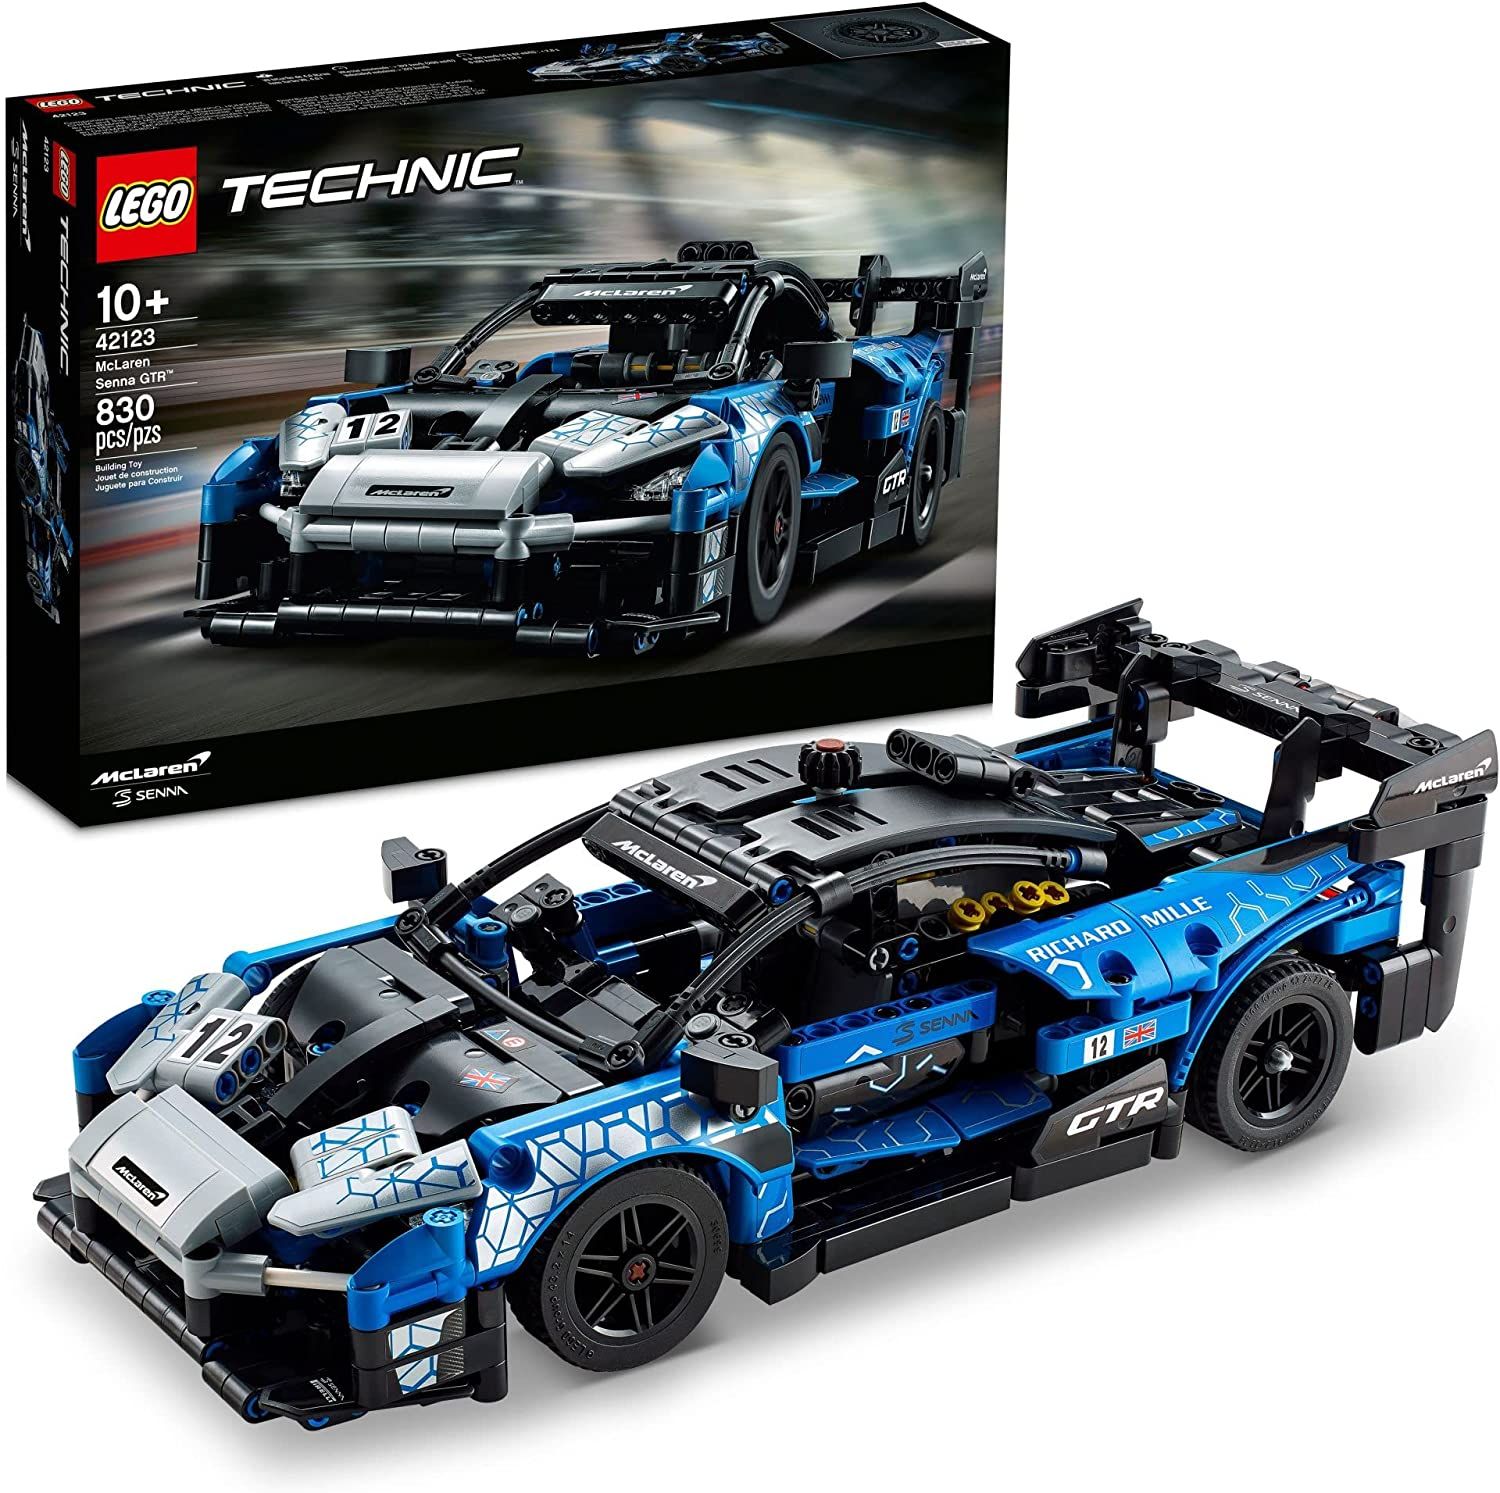 LEGO Technic McLaren Senna GTR 42123 Building Toy Set (830 Pieces) 1